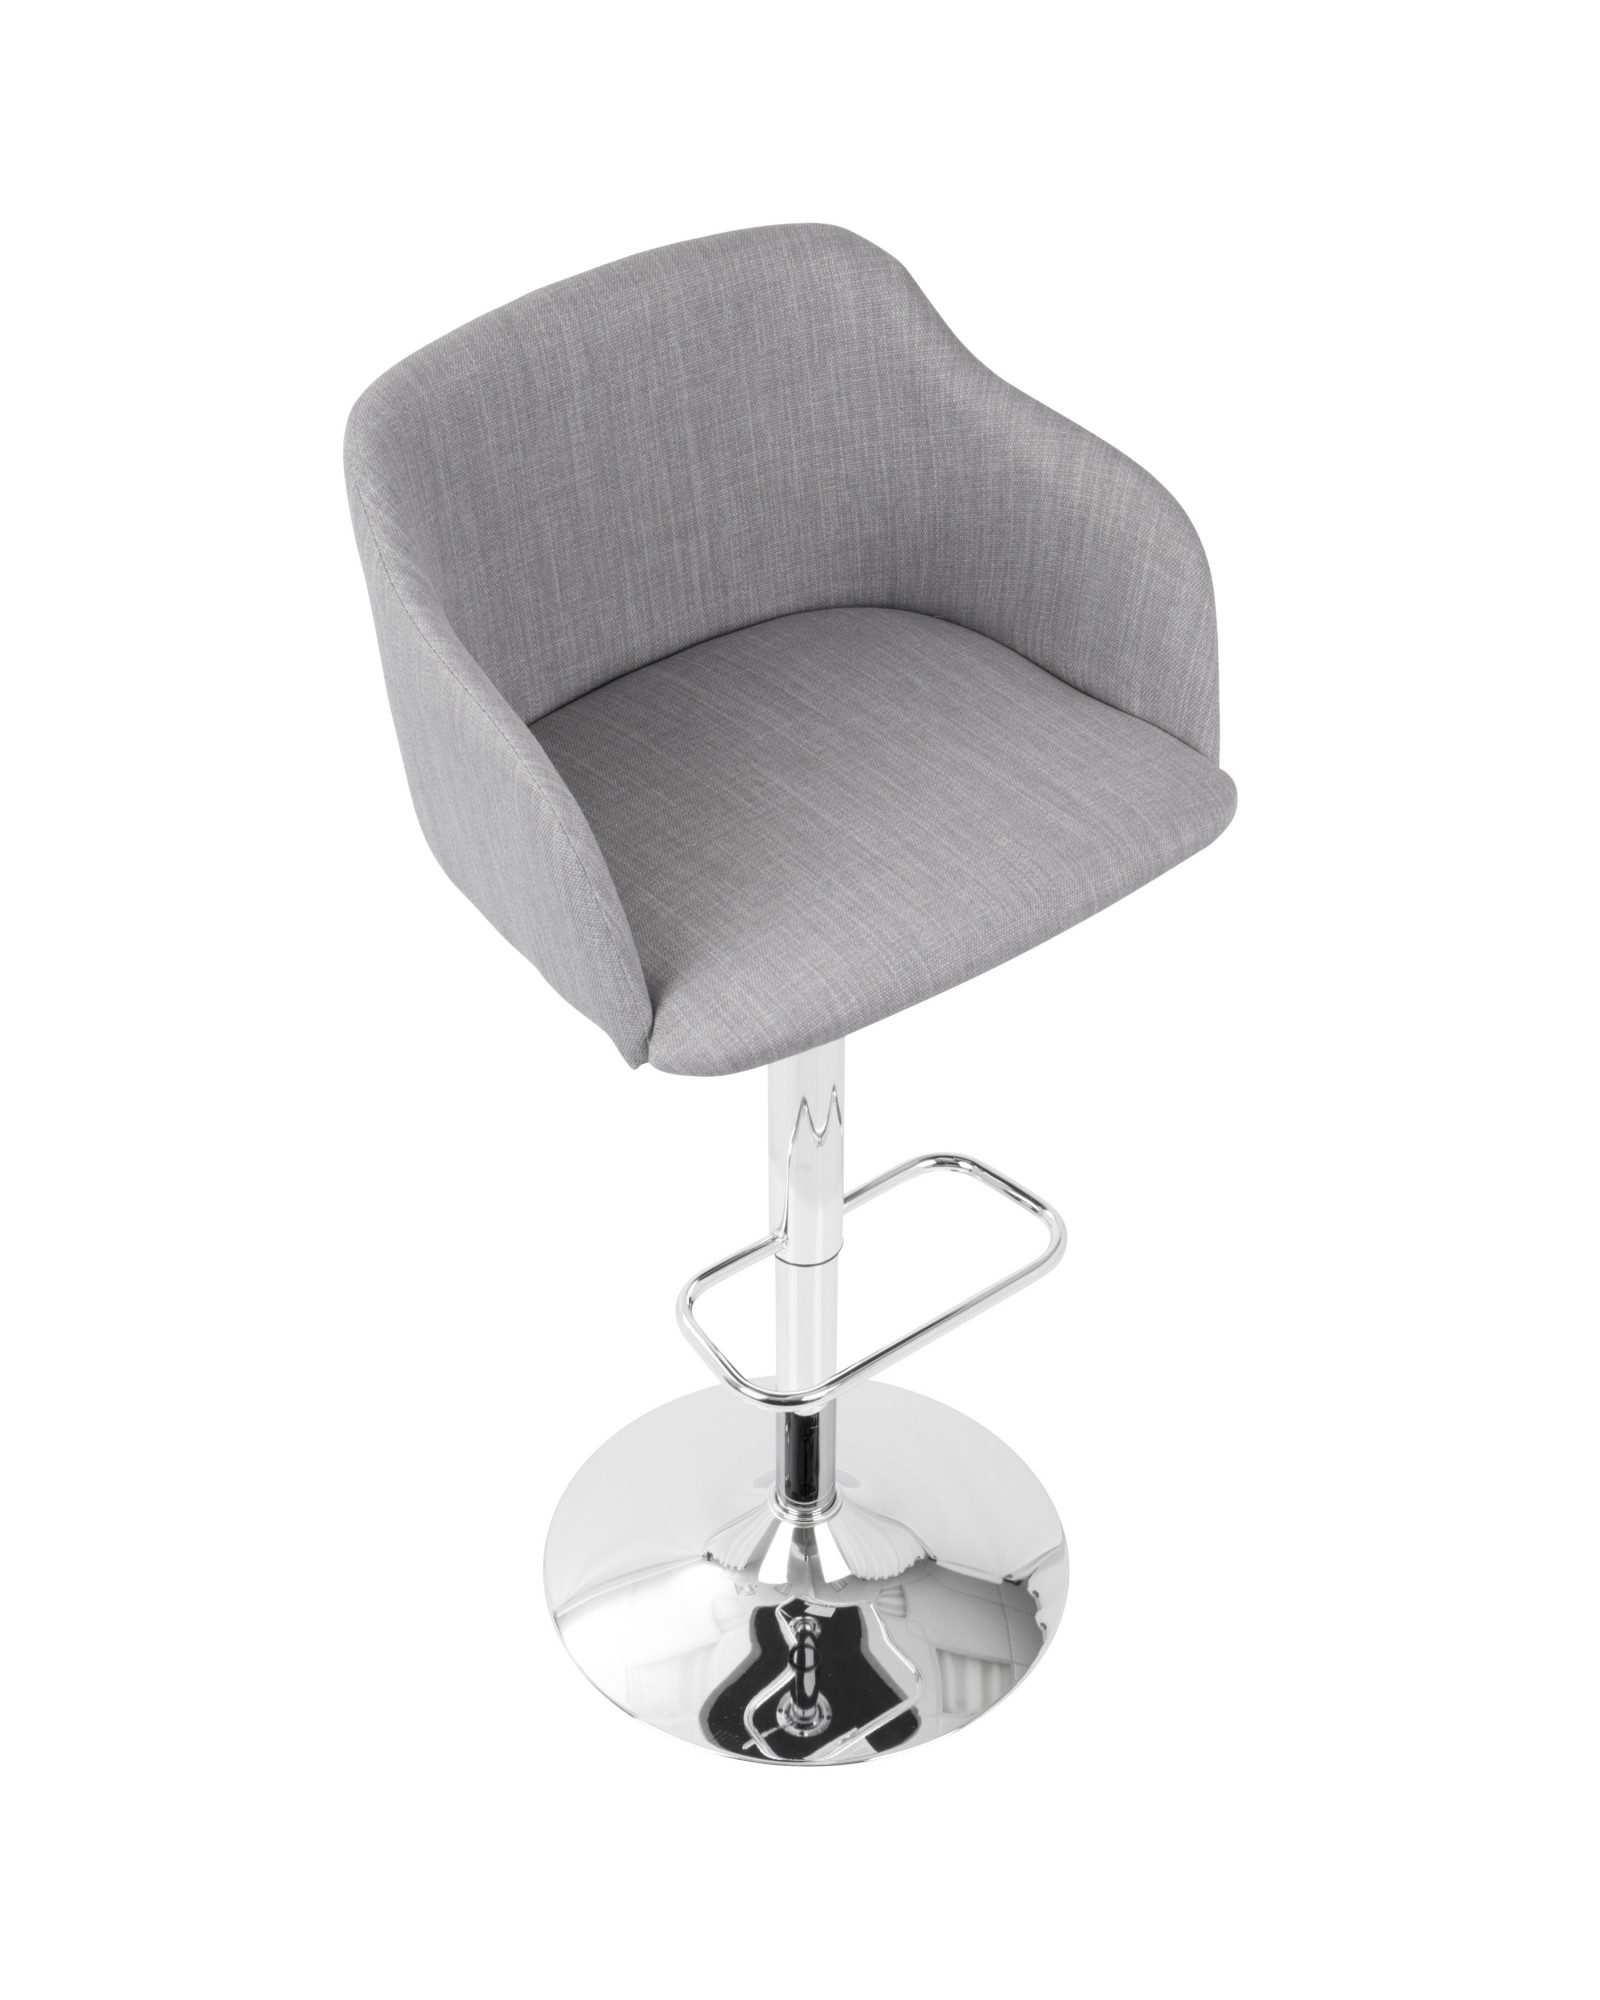 Daniella Contemporary Adjustable Barstool with Swivel in Light Grey